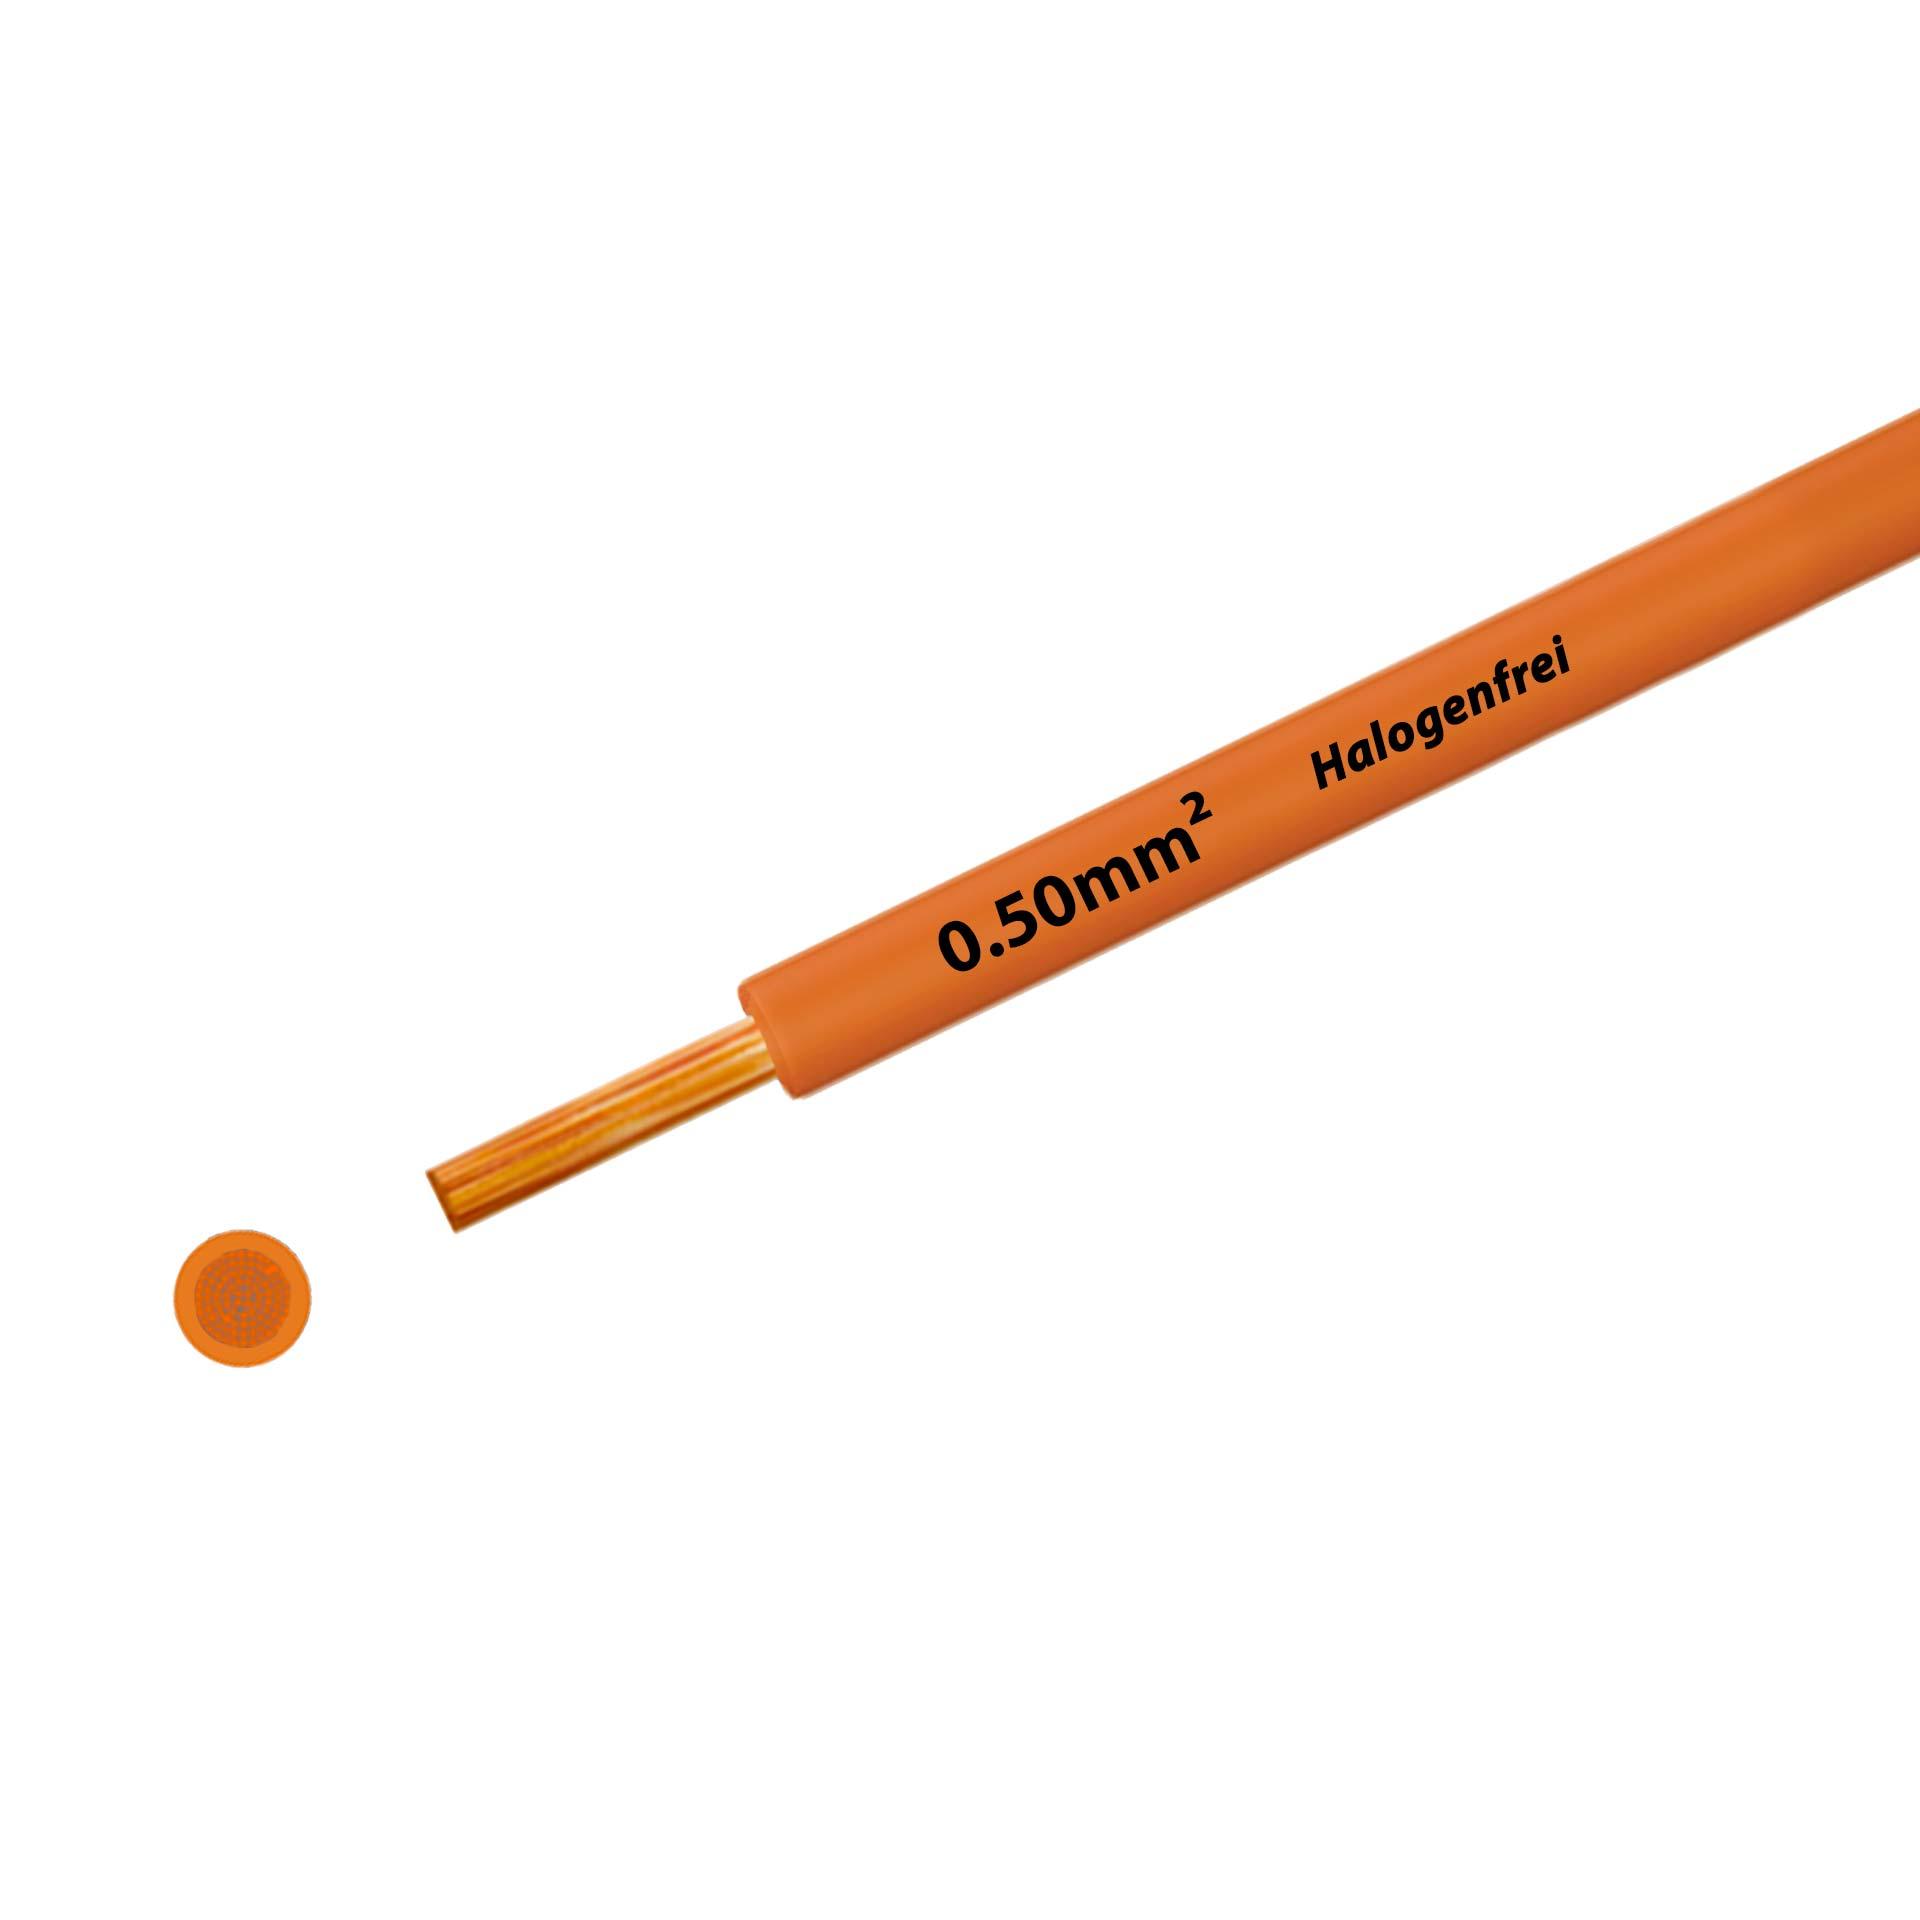 Litze halogenfrei 90° C , 500V, 0.50 mm2, orange (RAL 2003), auf Kunststoffrolle